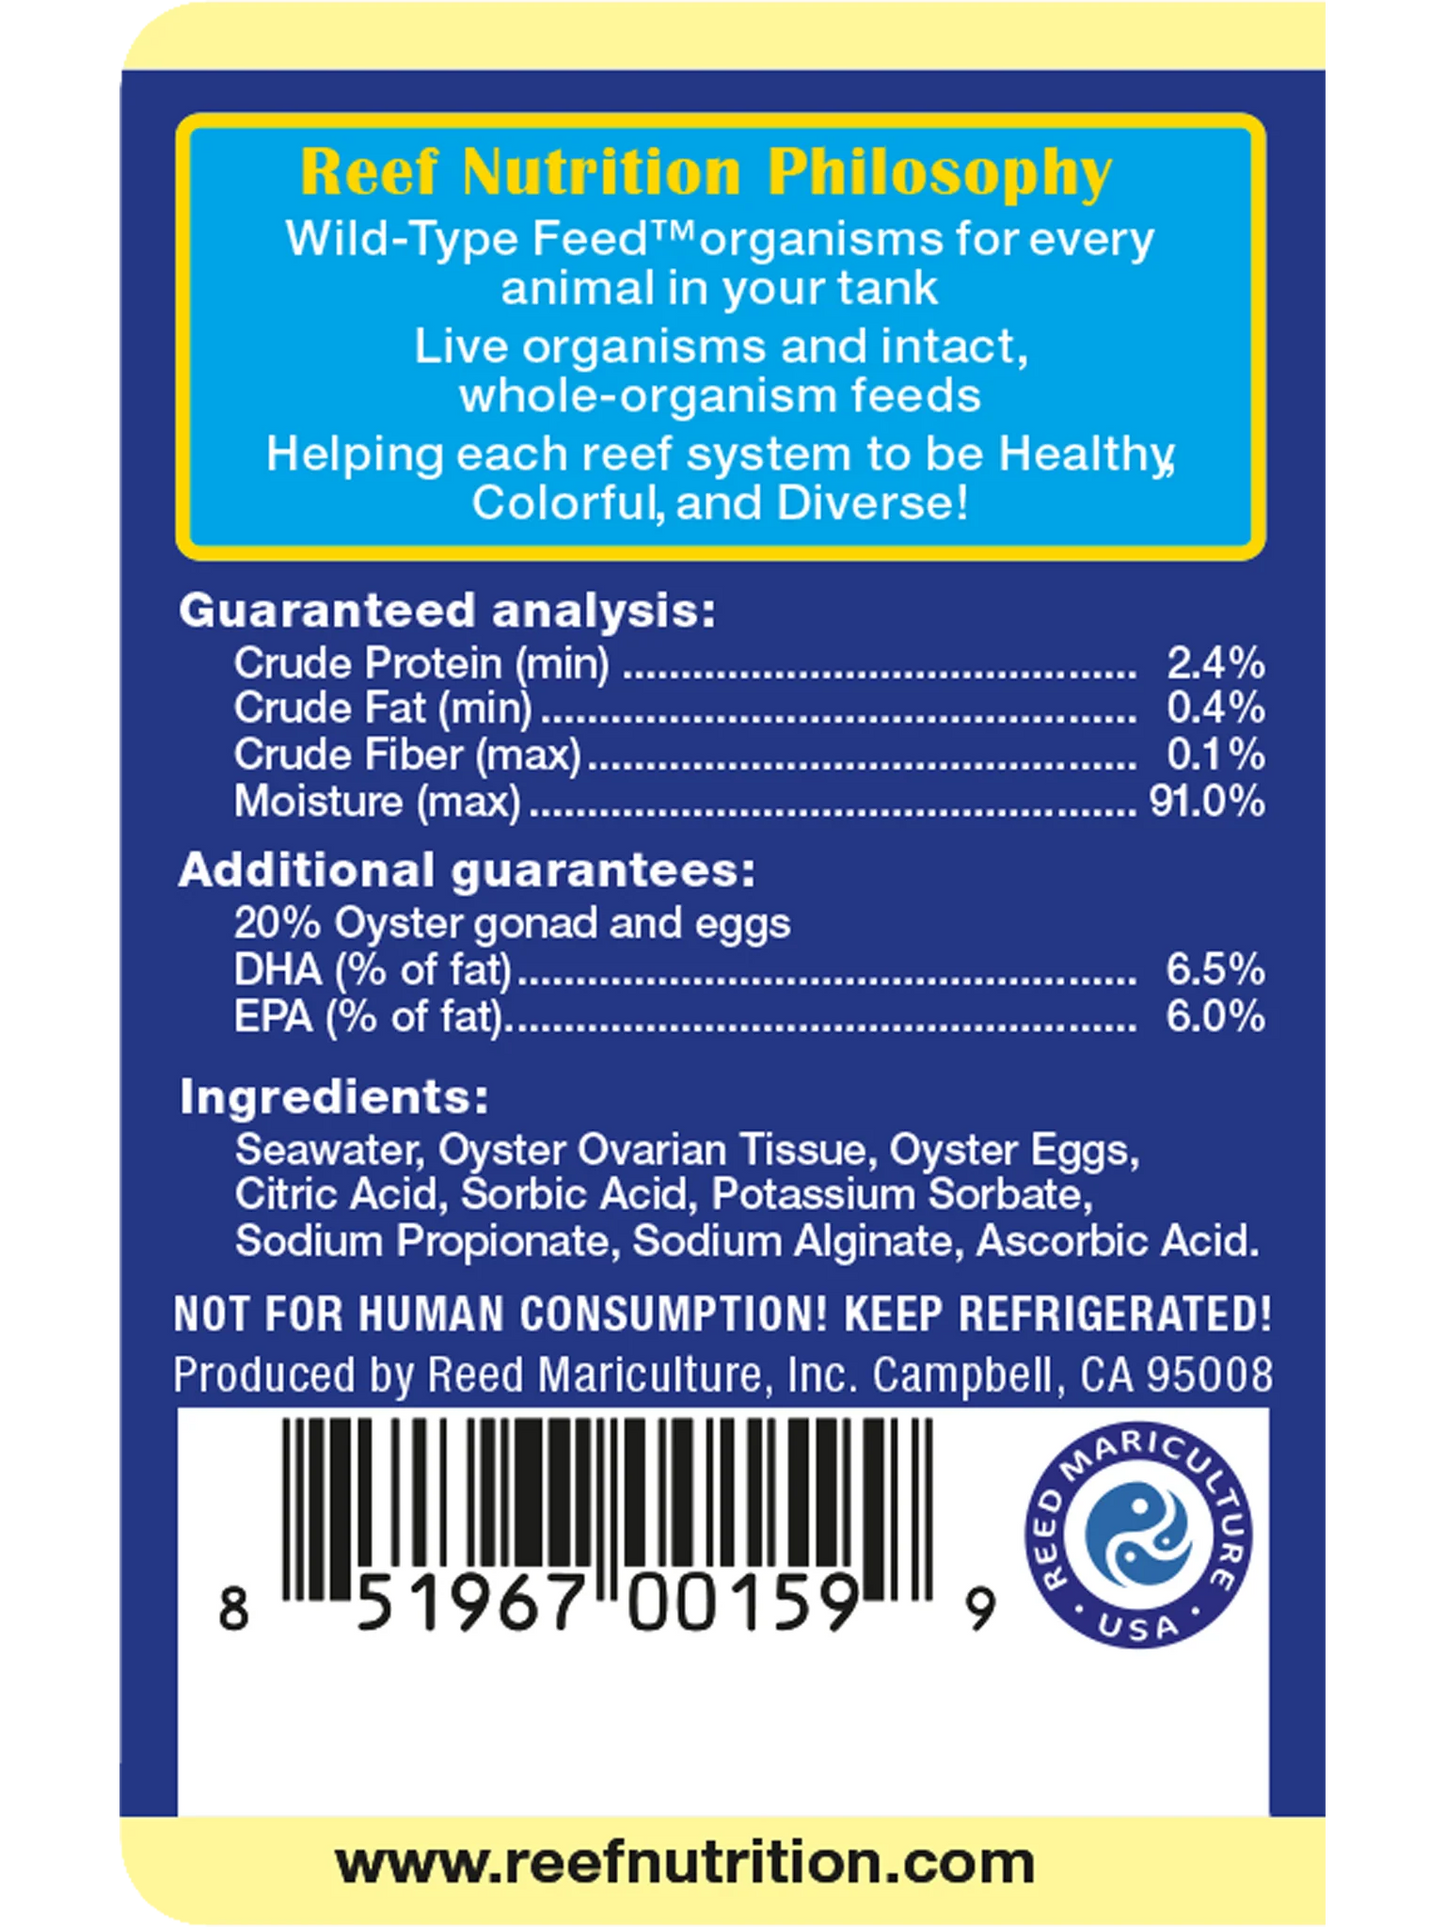 OYSTER-FEAST® (6oz.) - Reef Nutrition